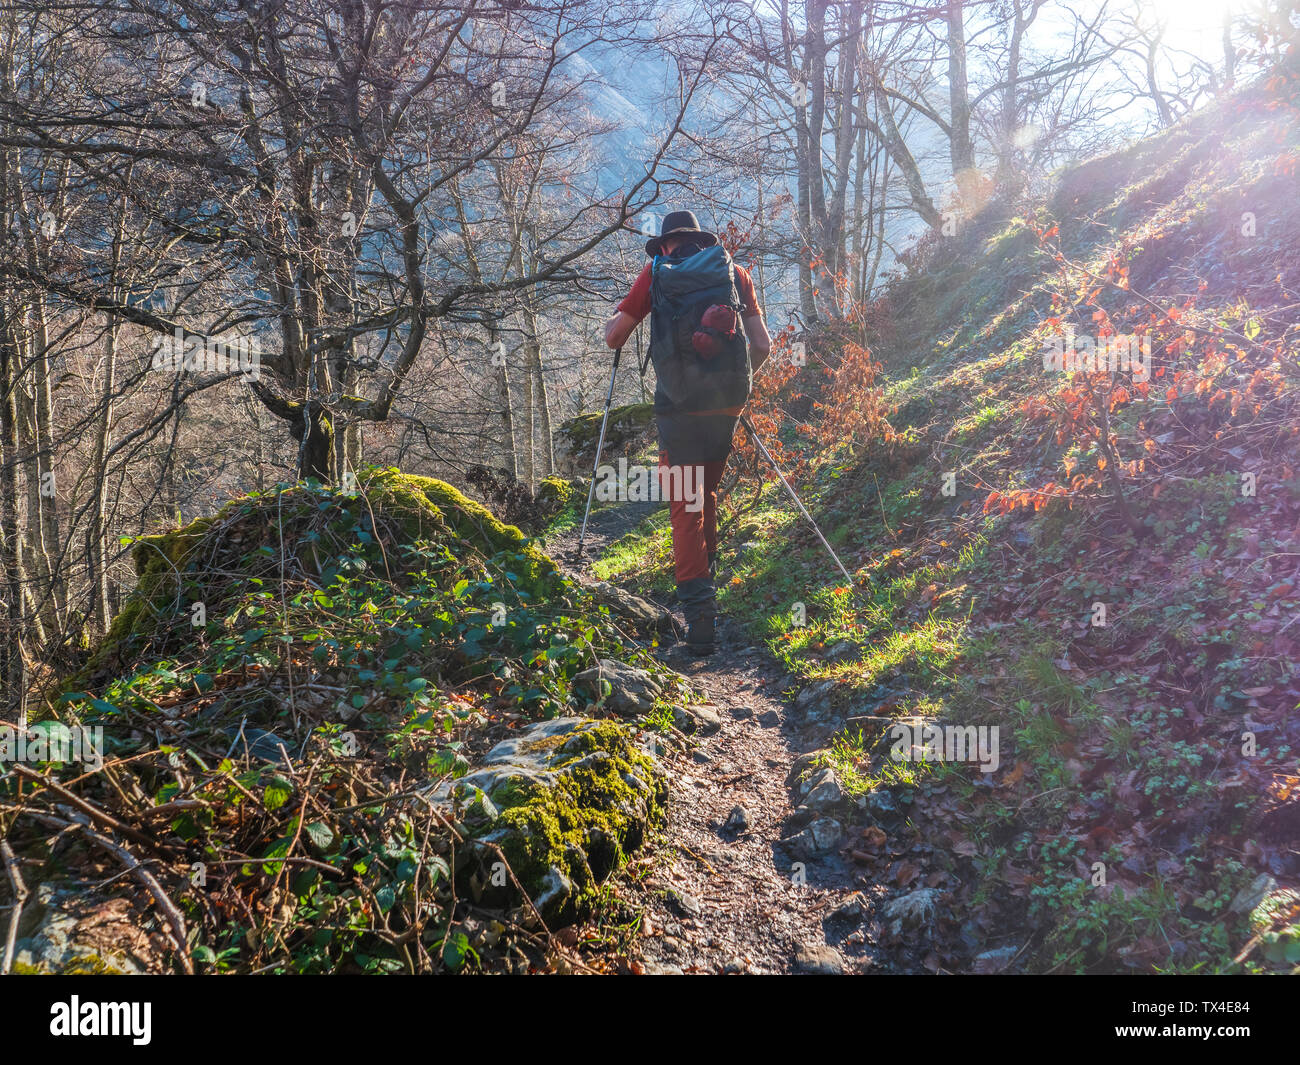 Spain, Asturia, Cantabrian Mountains, senior man on a hiking trip through the woods Stock Photo